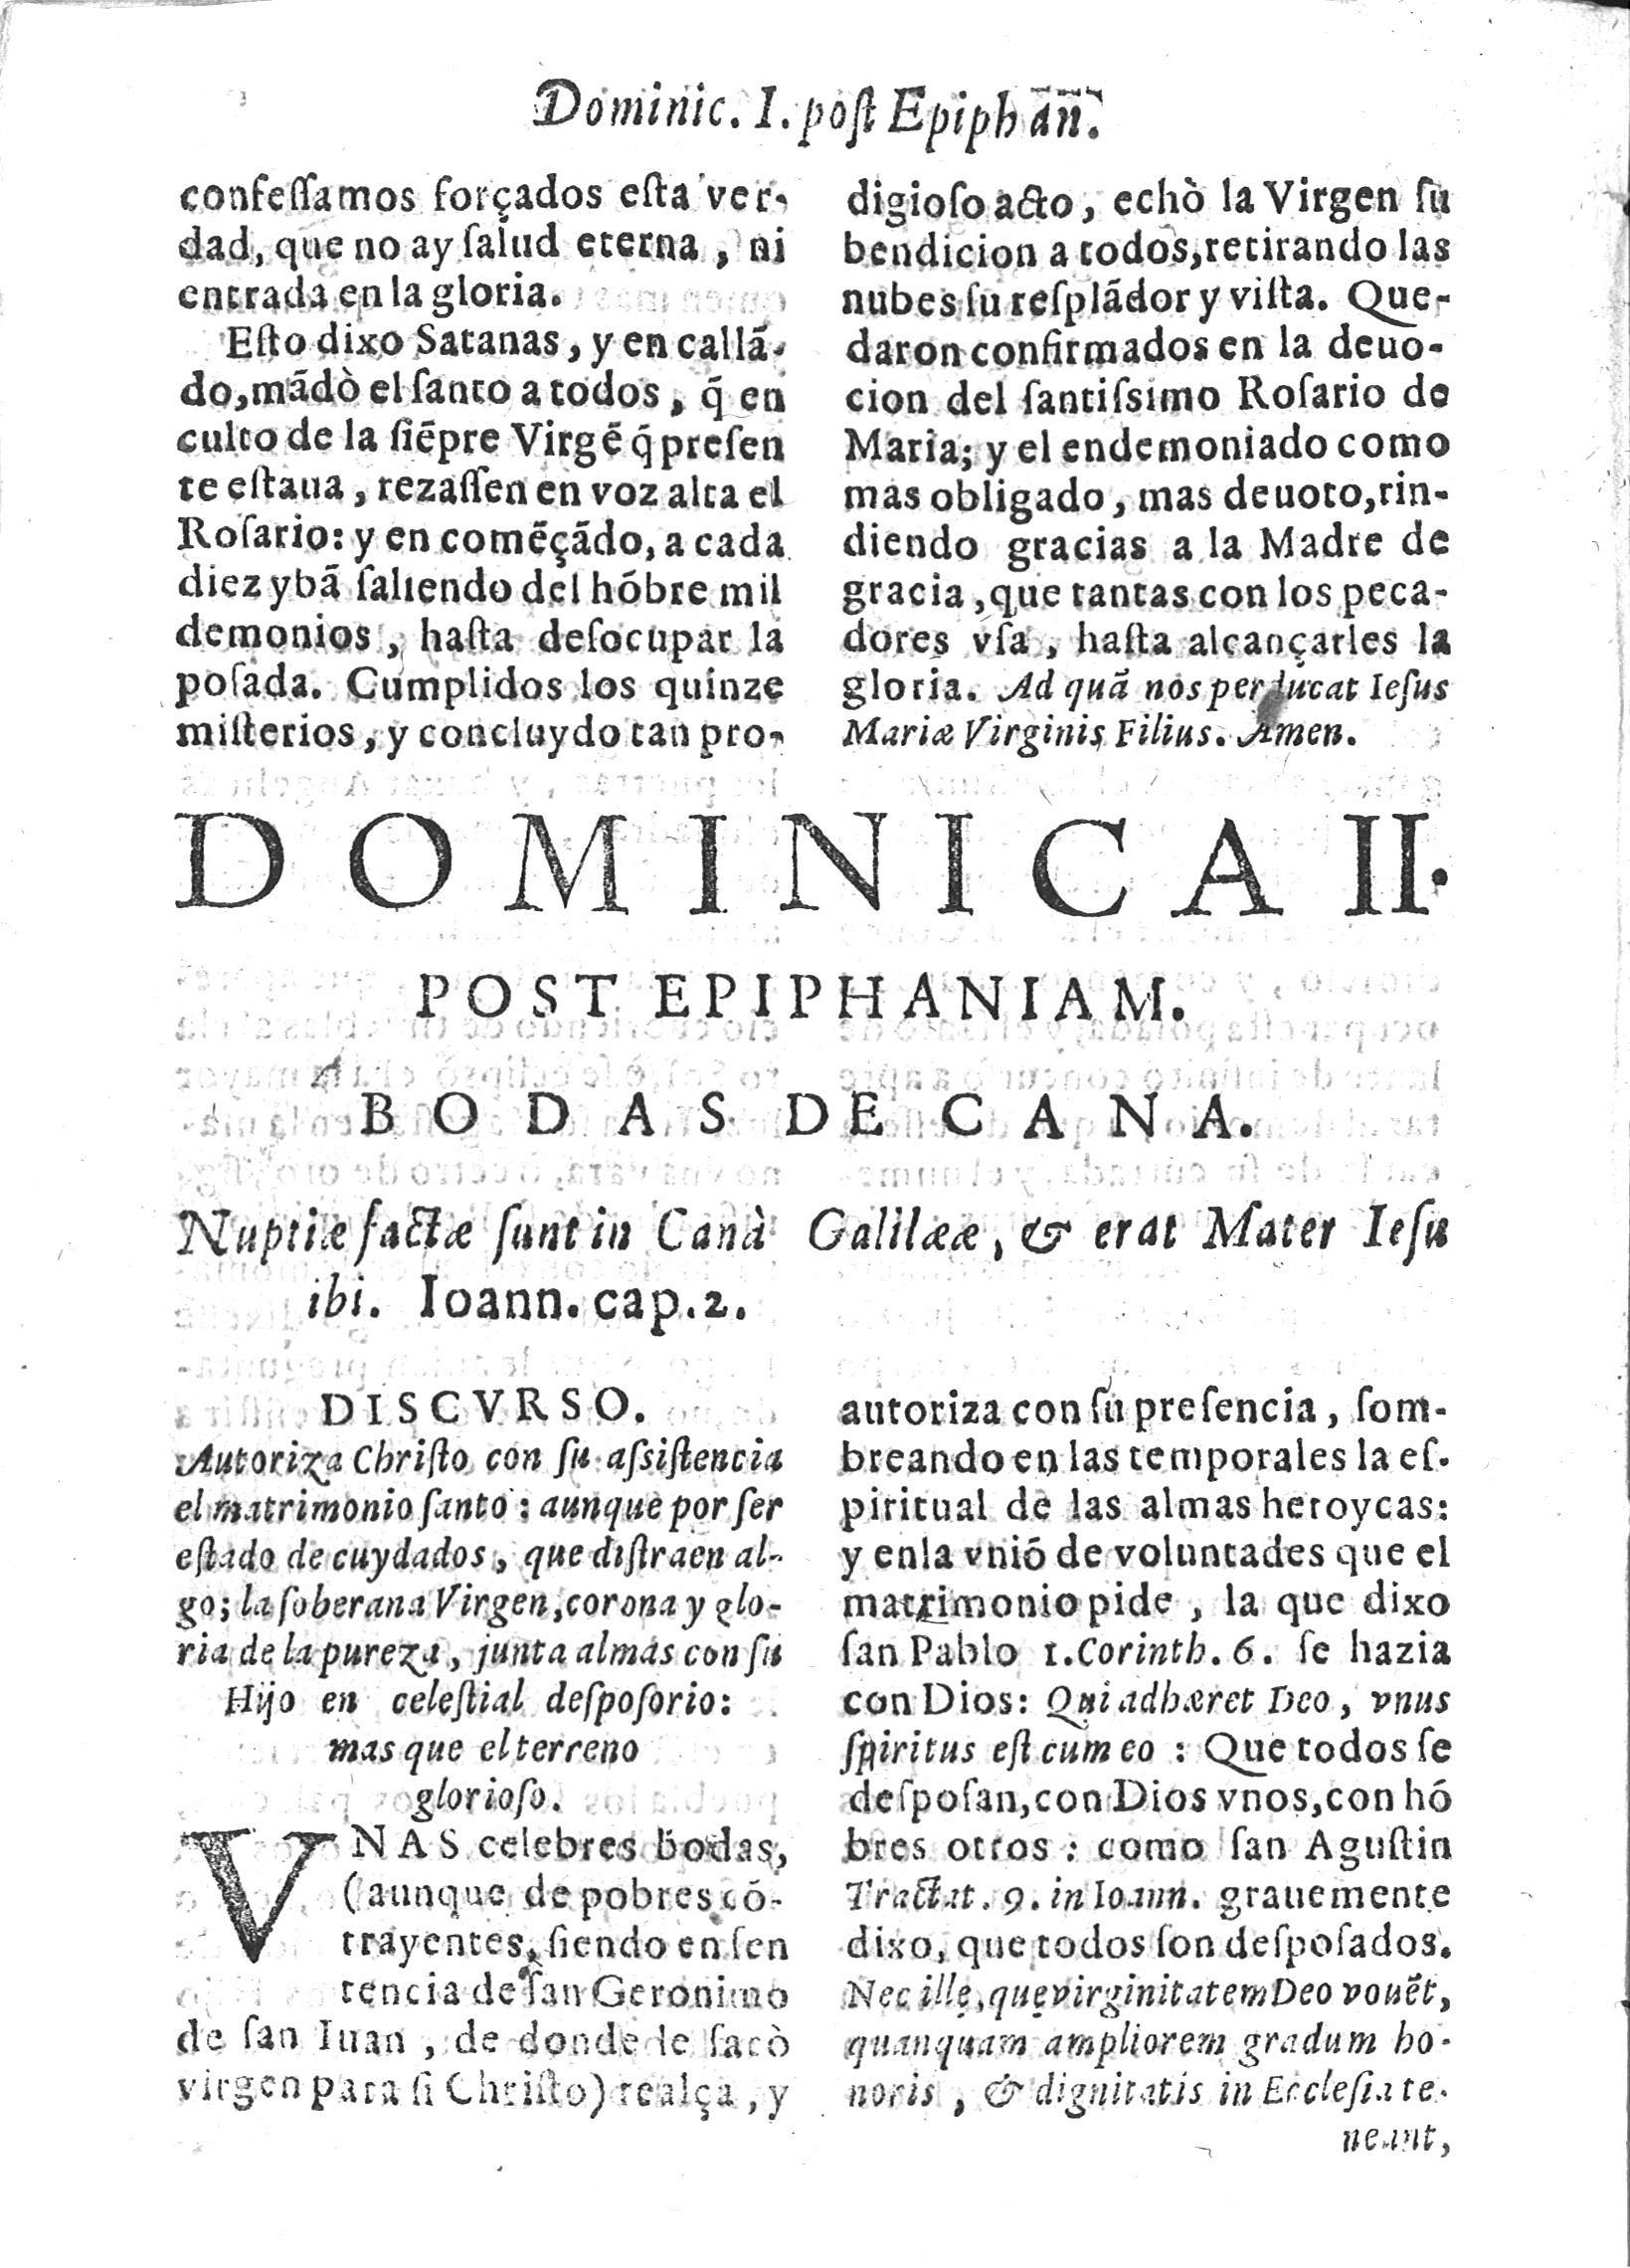 Dominica II post Epiphaniam. Bodas de Cana